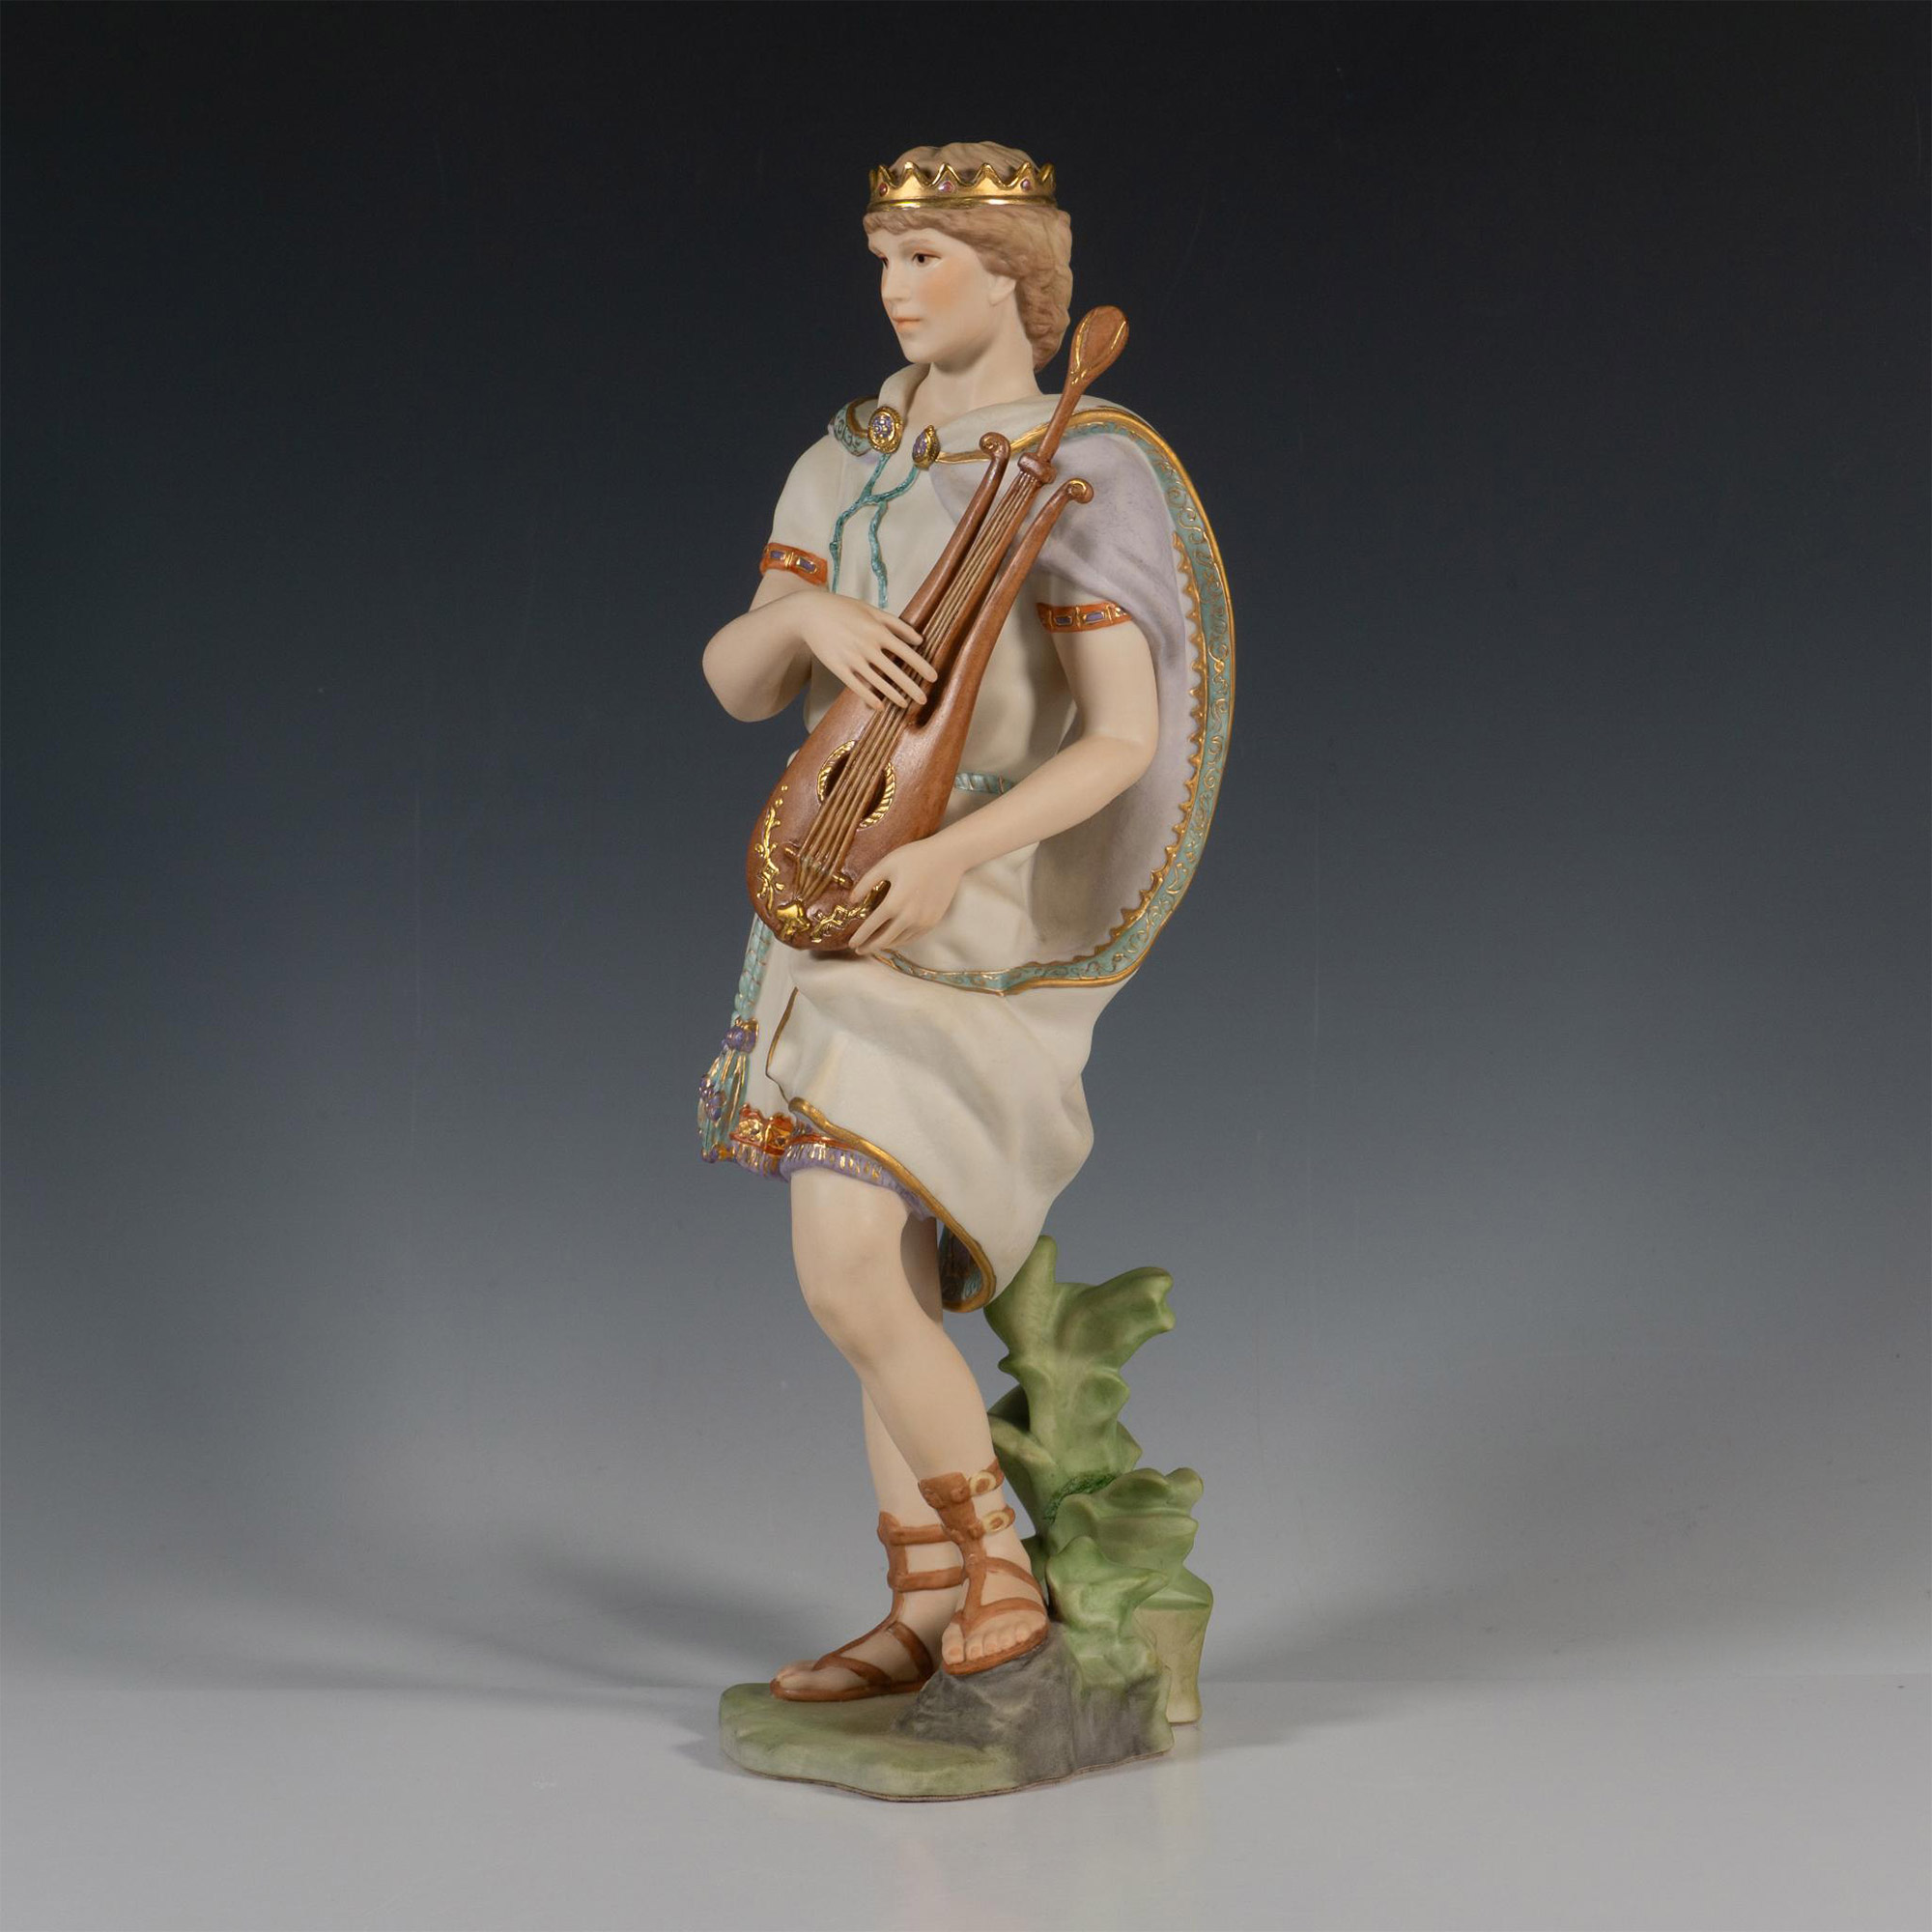 Cybis Limited Edition Figurine, King David - Image 2 of 5